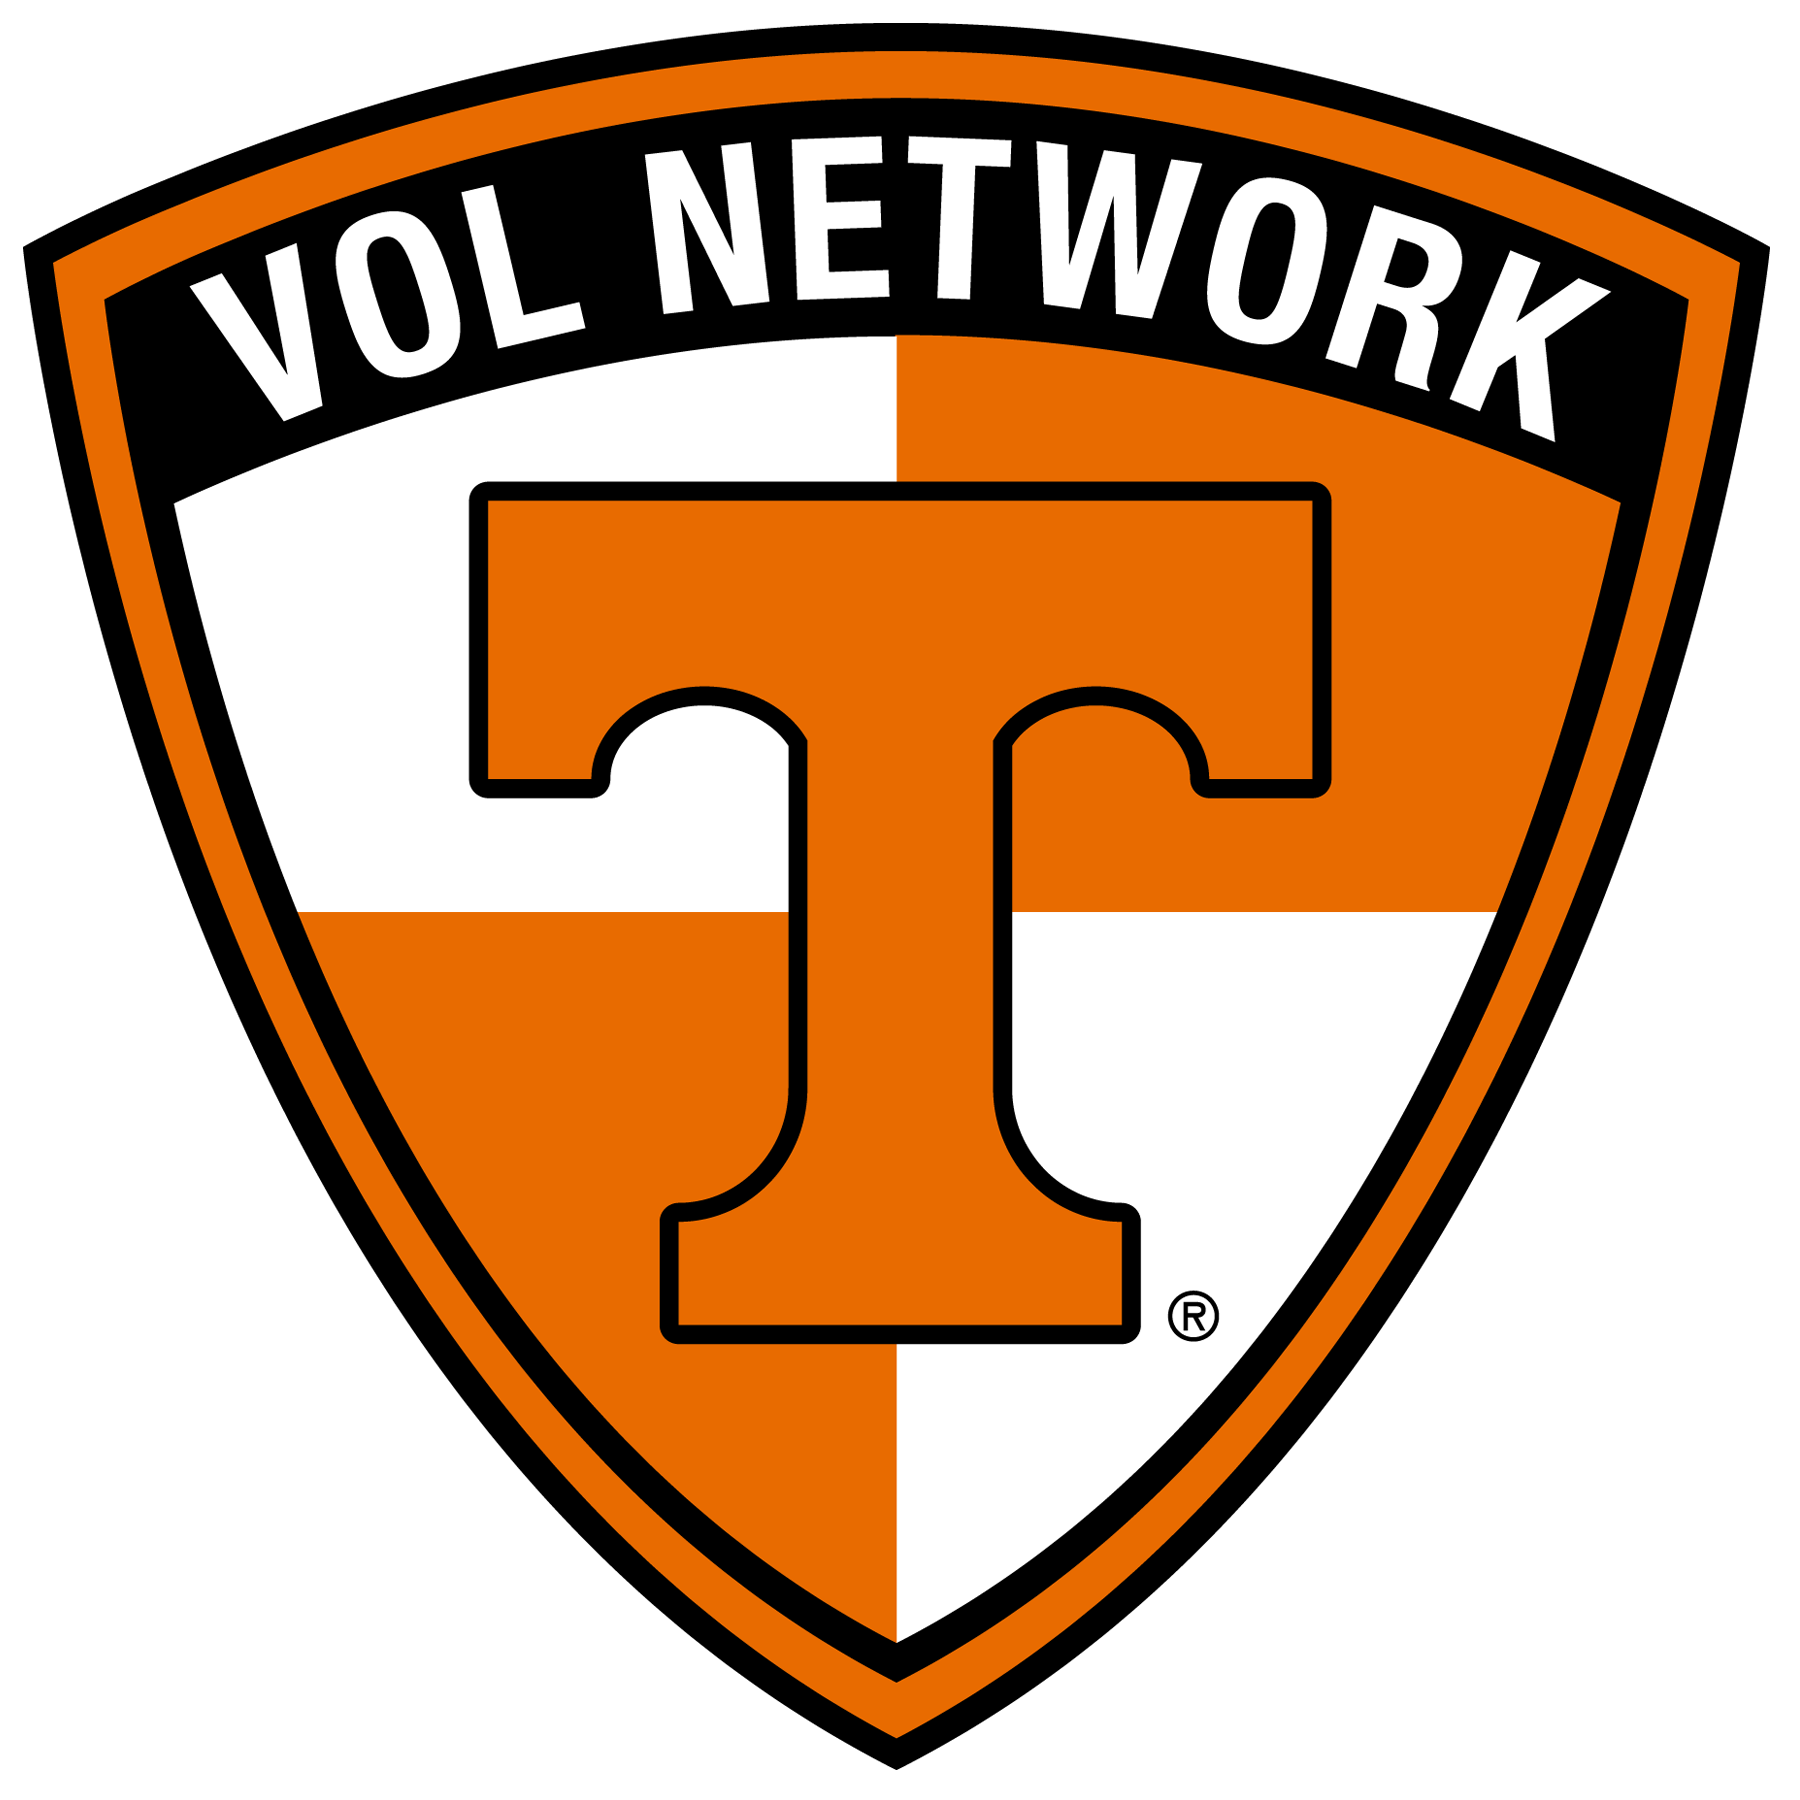 Vol Network